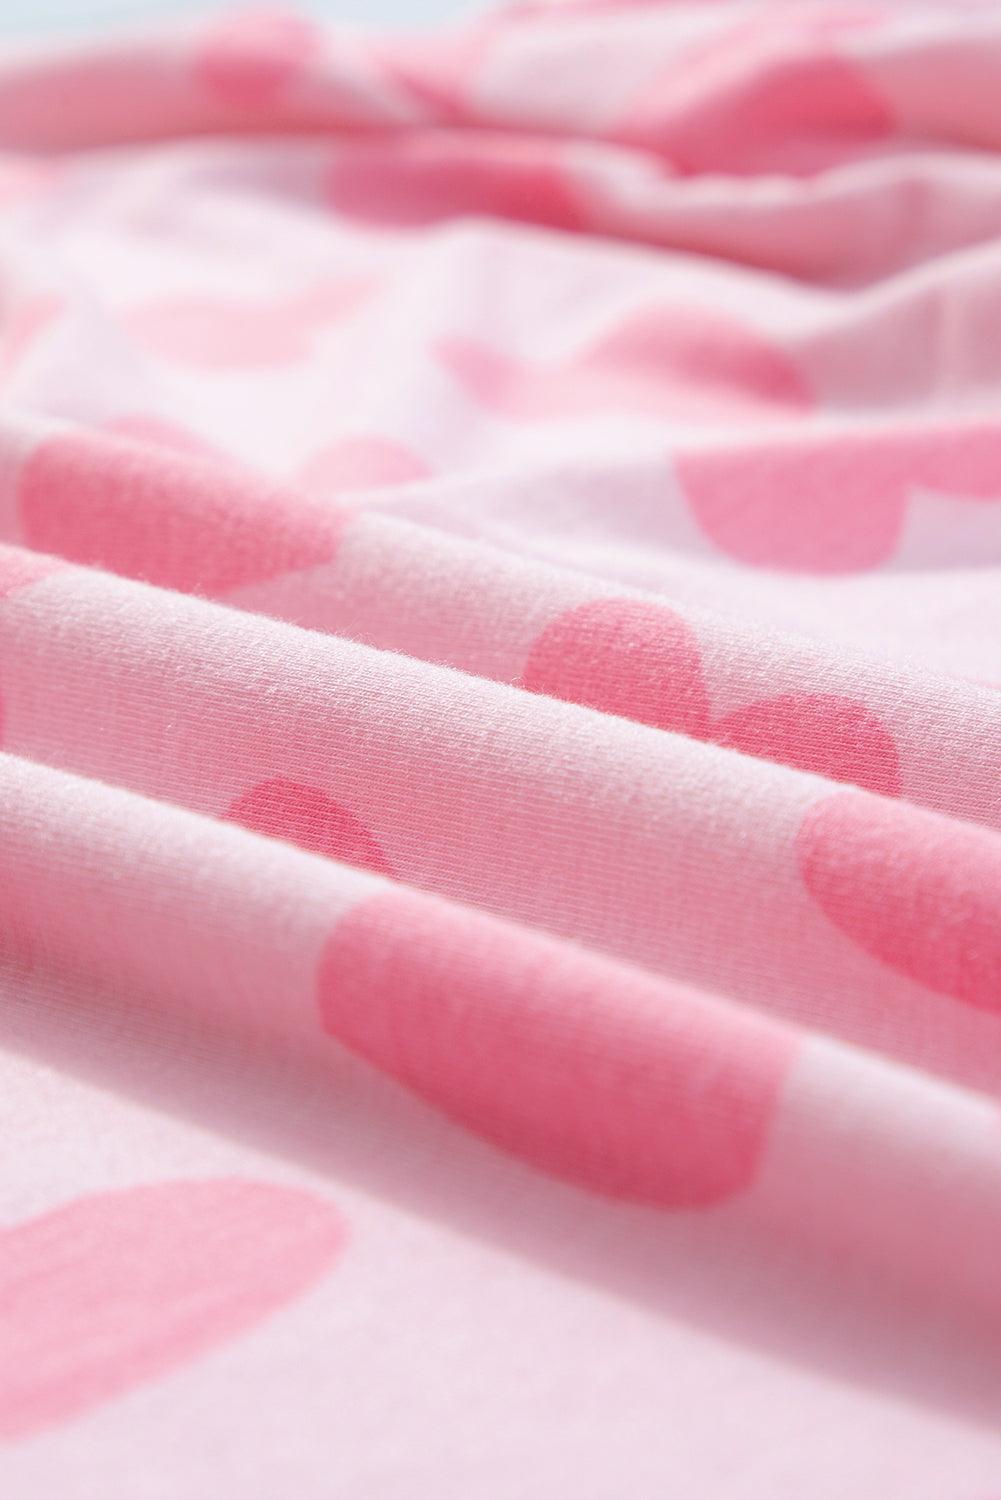 Pink Heart Print Long Sleeve Top and Shorts Loungewear Set - Ninonine